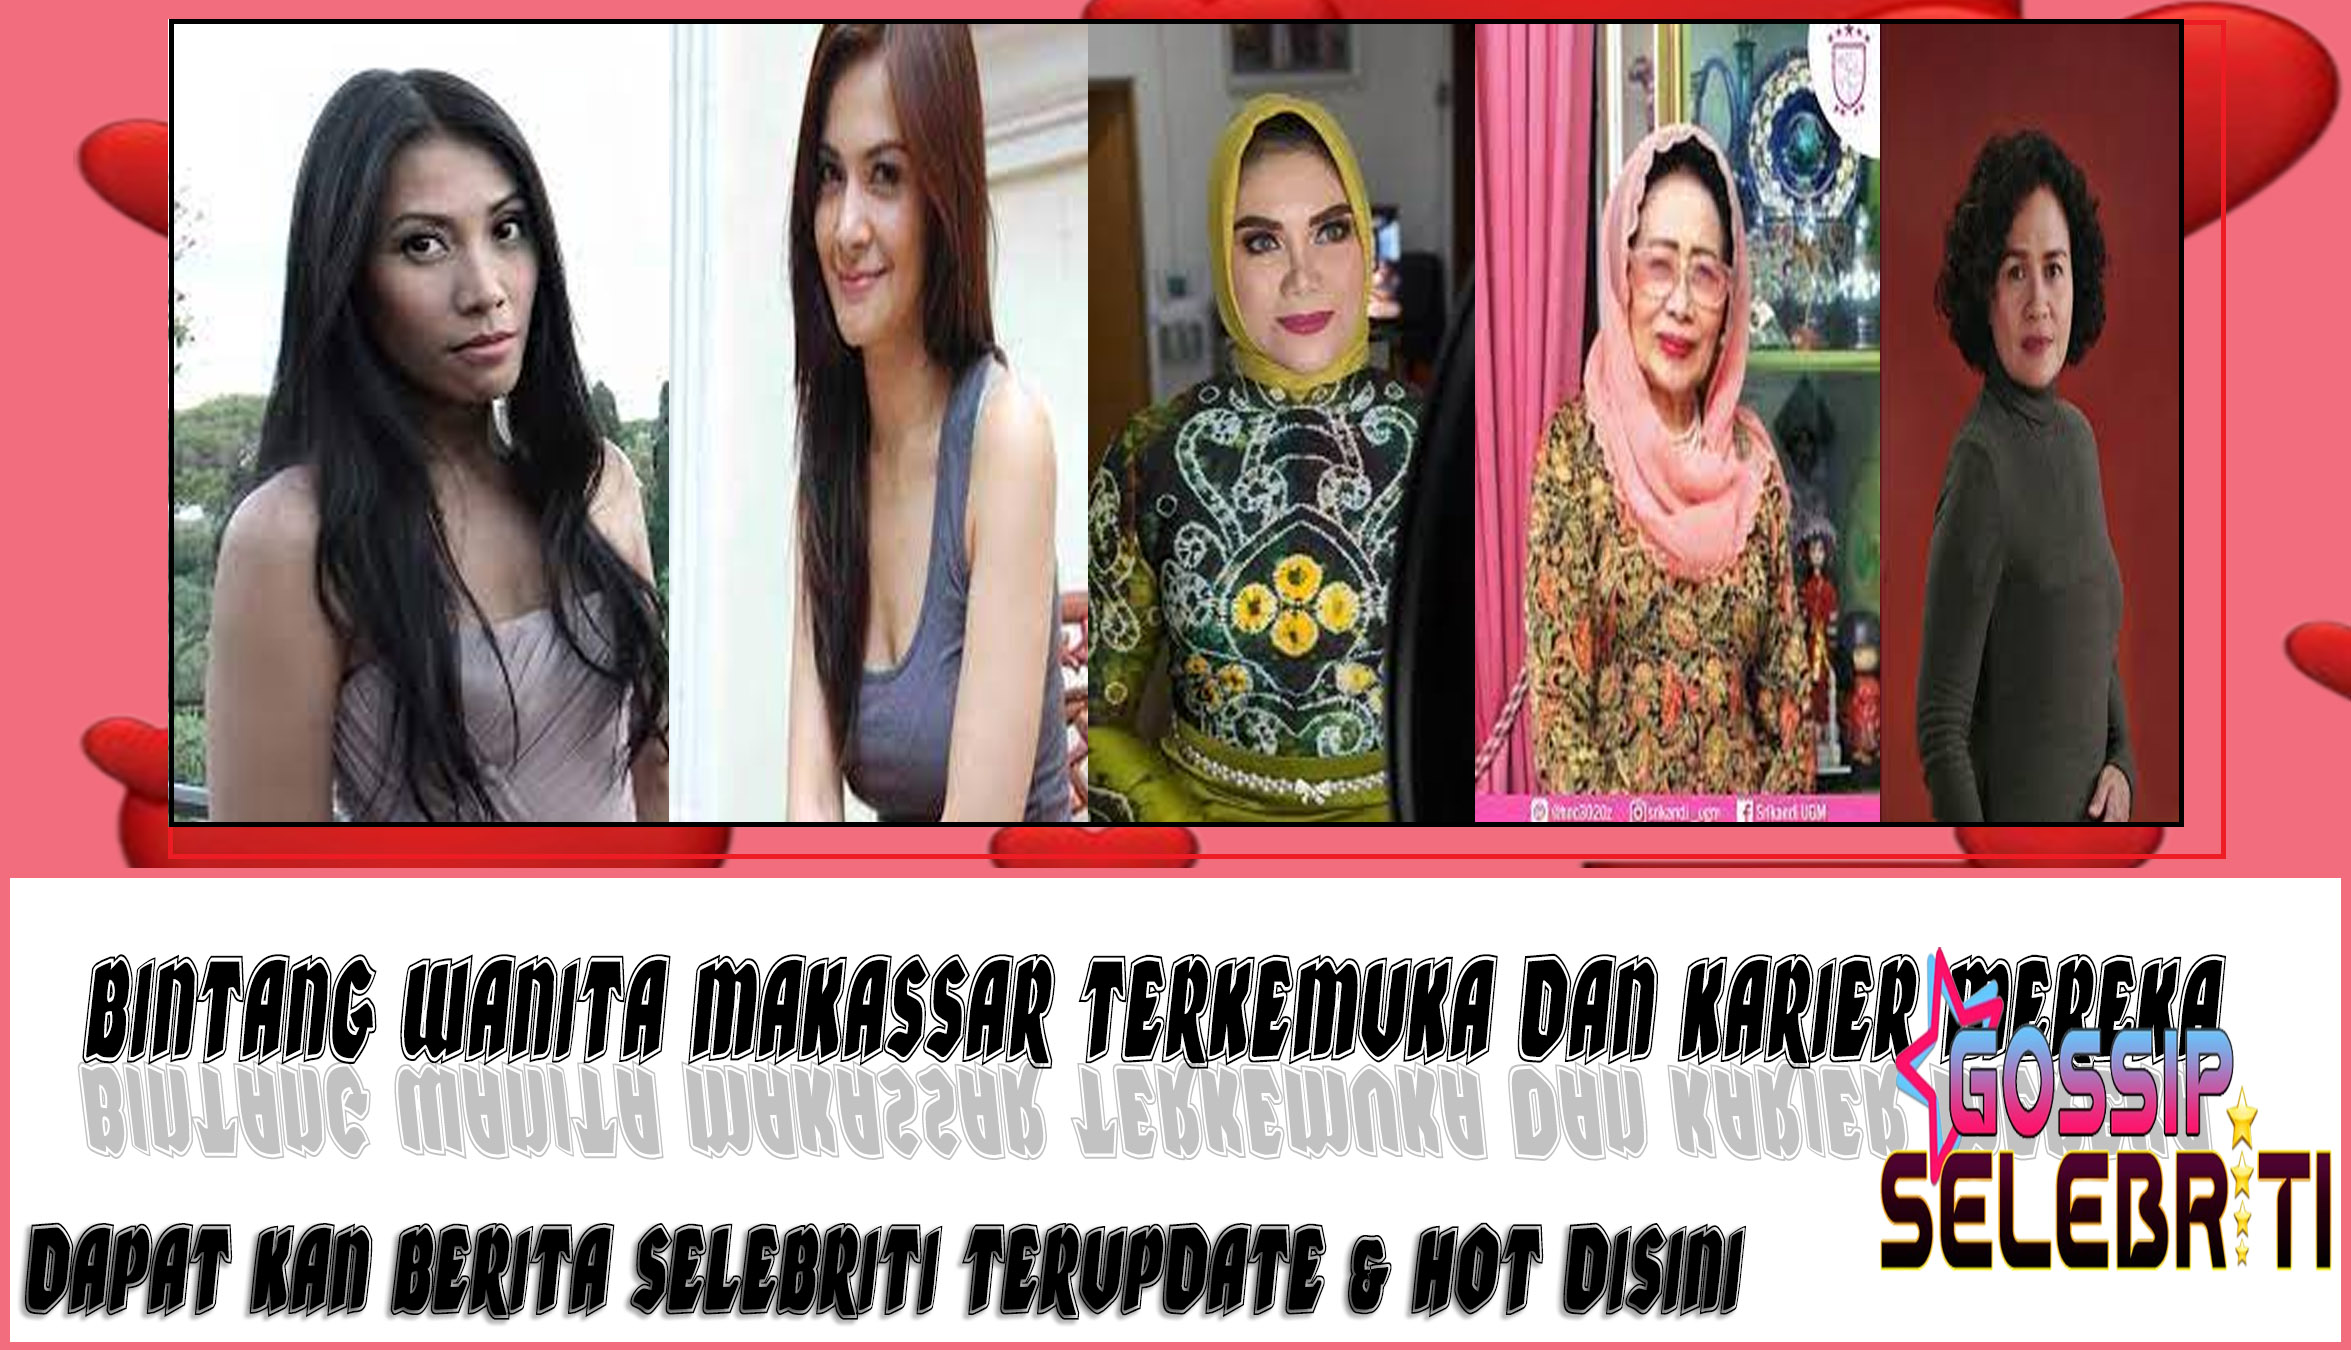 5 Bintang Wanita Makassar